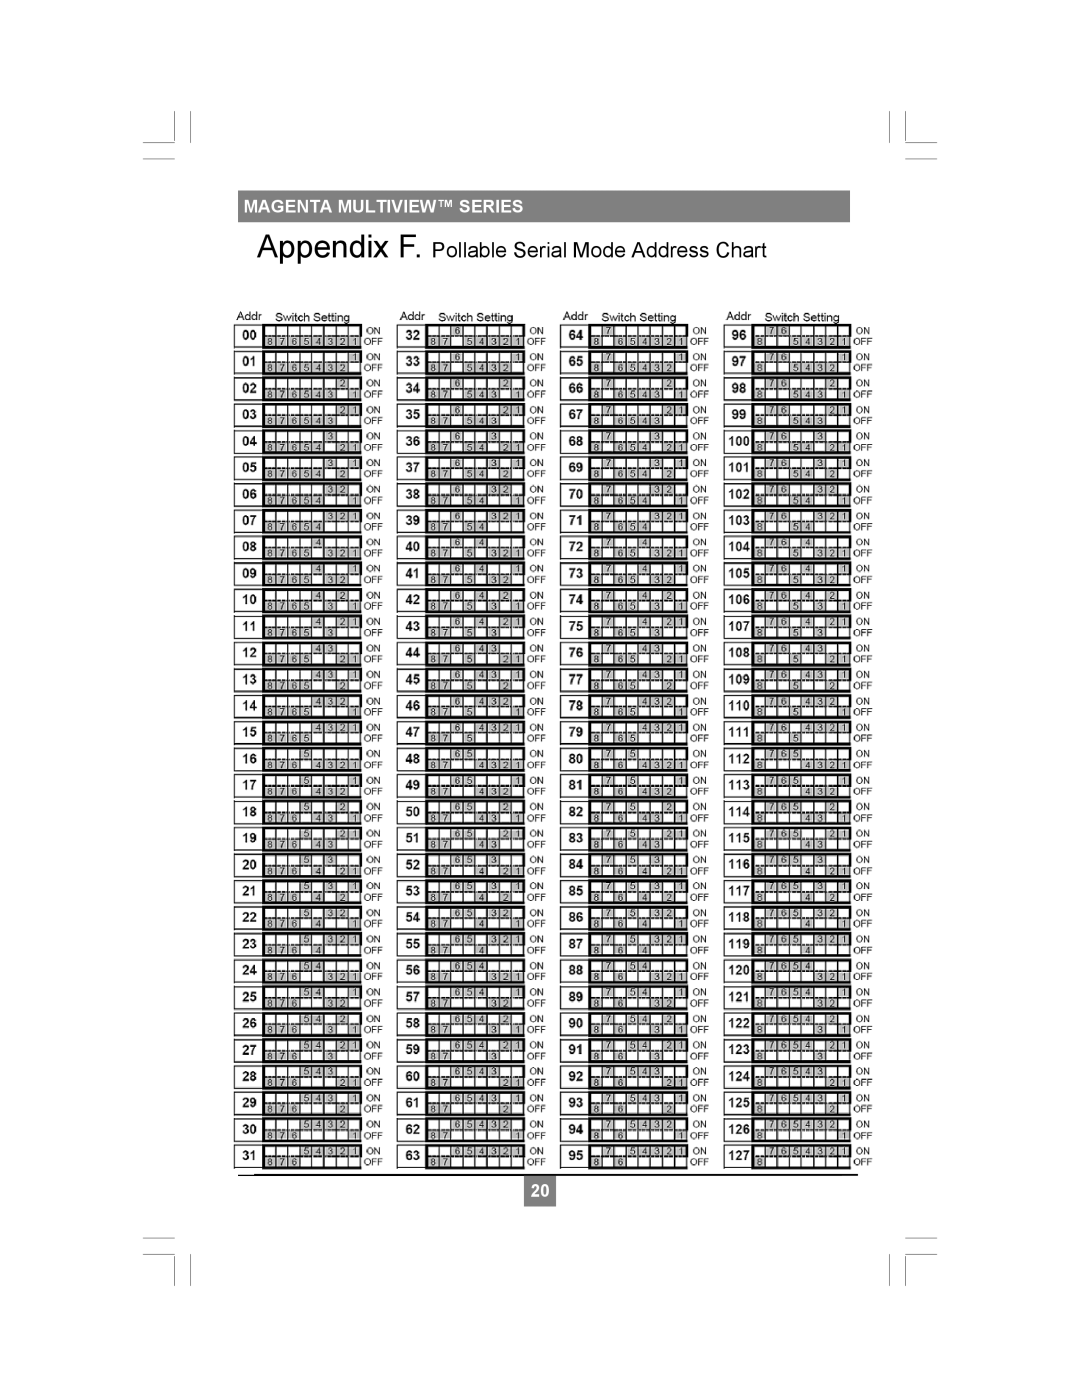 Magenta XR2000 setup guide Appendix F. Pollable Serial Mode Address Chart, Magenta Multiview Series 